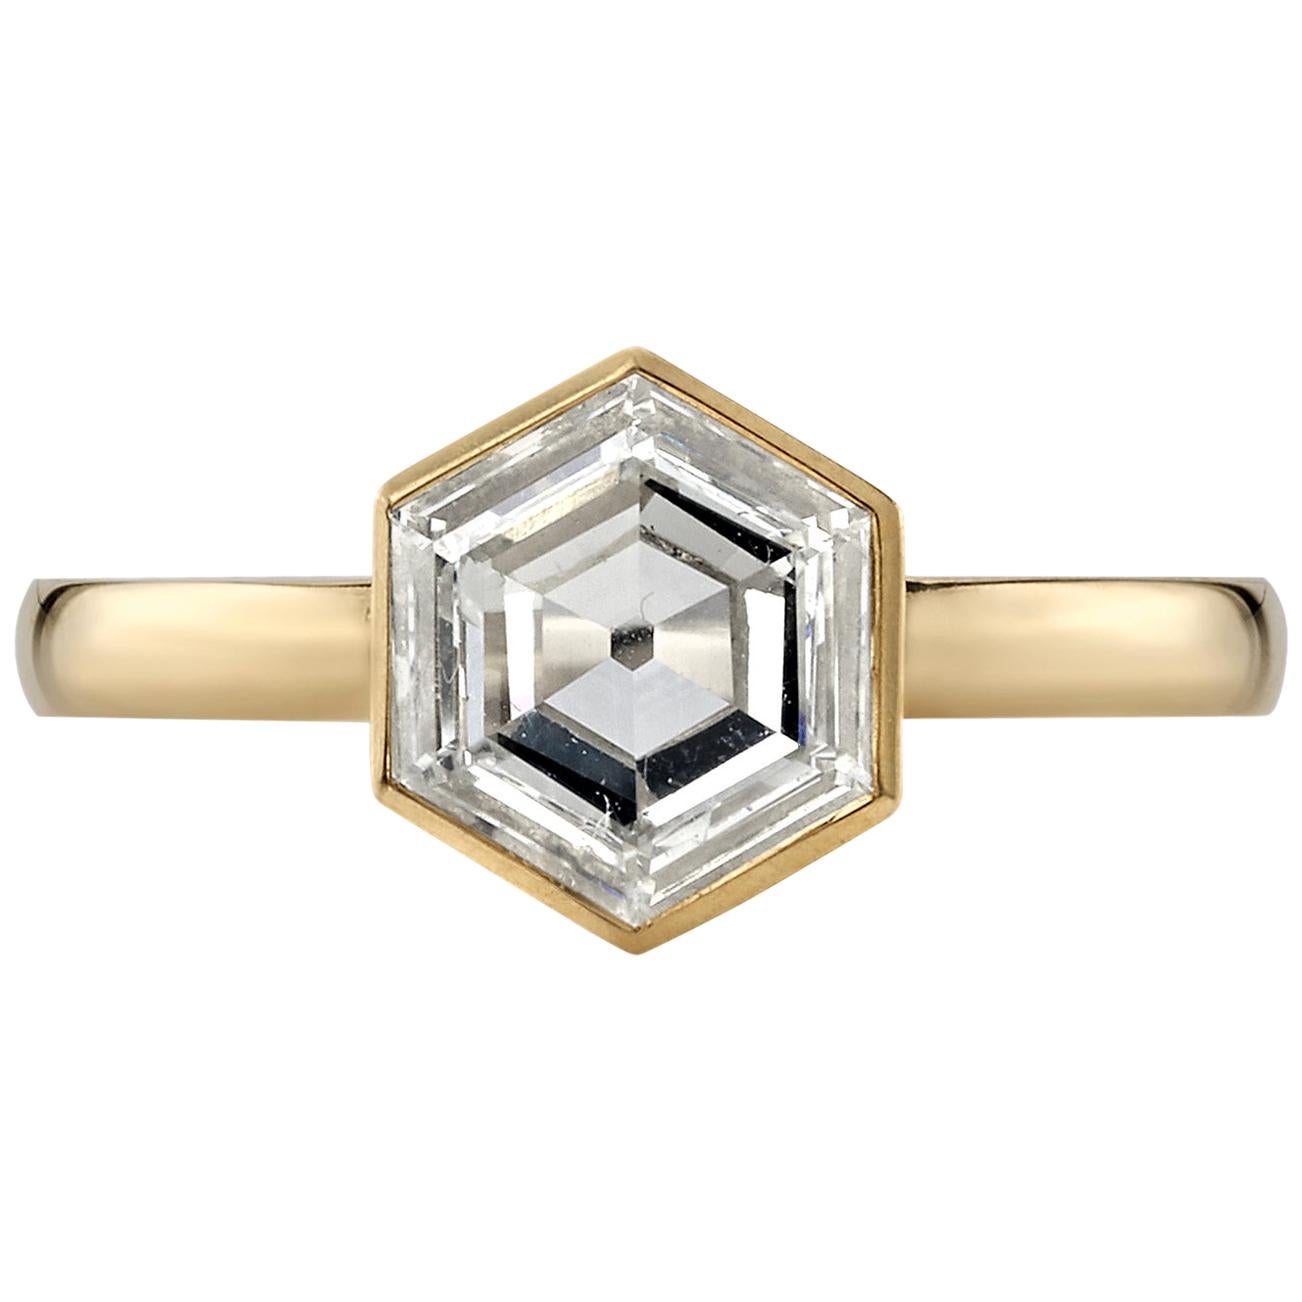 Handcrafted Wyler Hexagonal Cut Diamond Ring by Single Stone